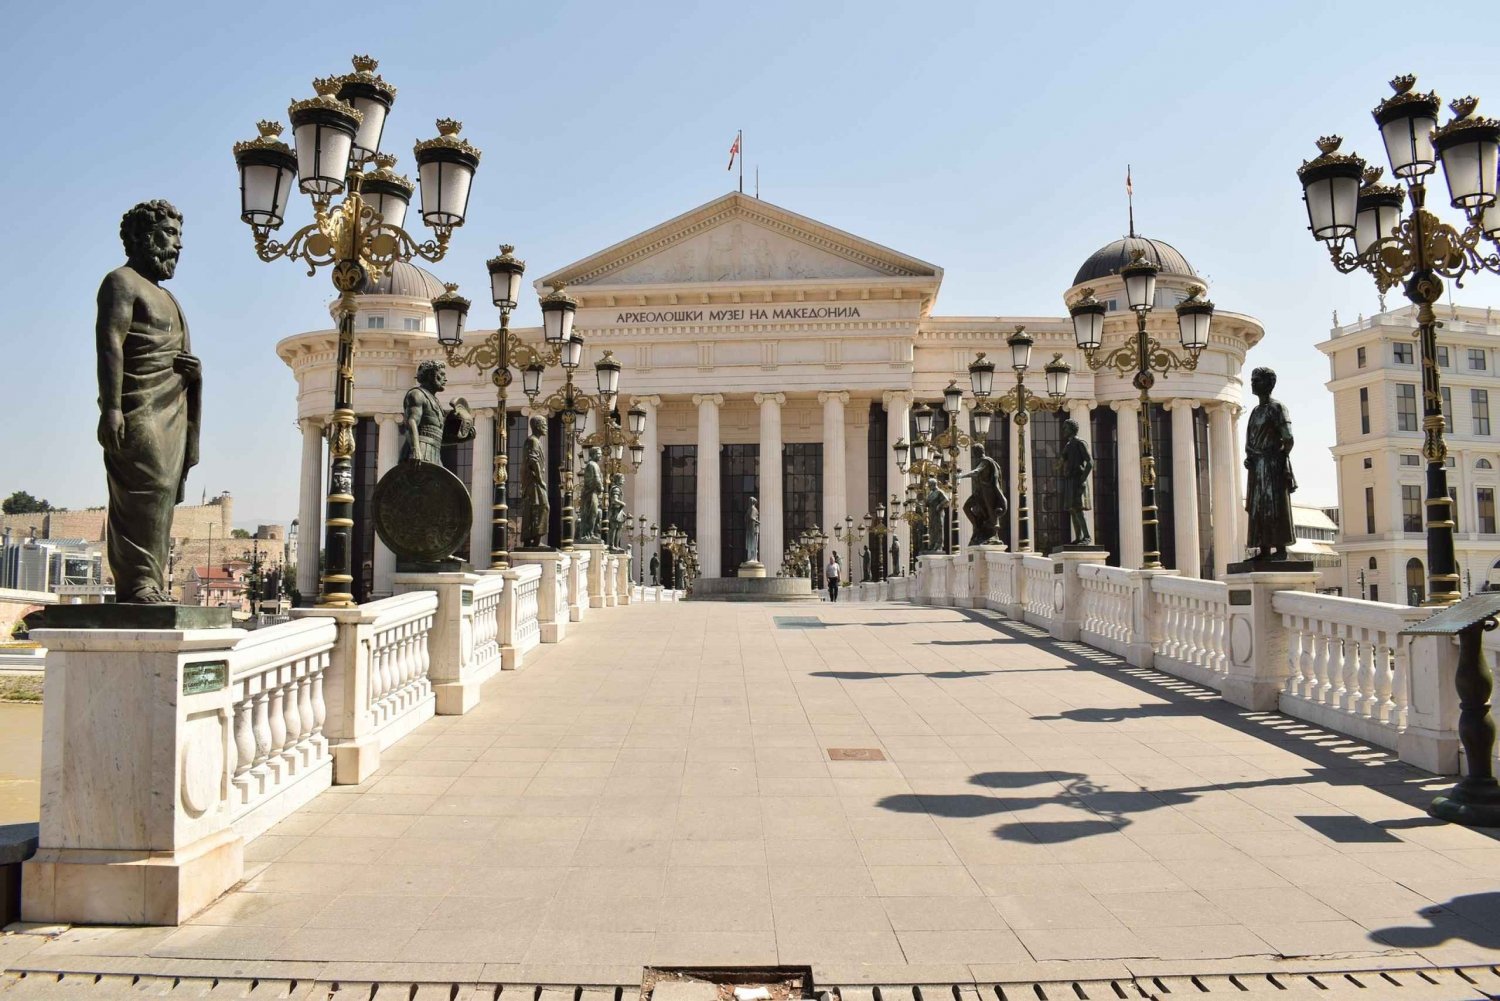 Skopje: Neoclassical City Walking Tour